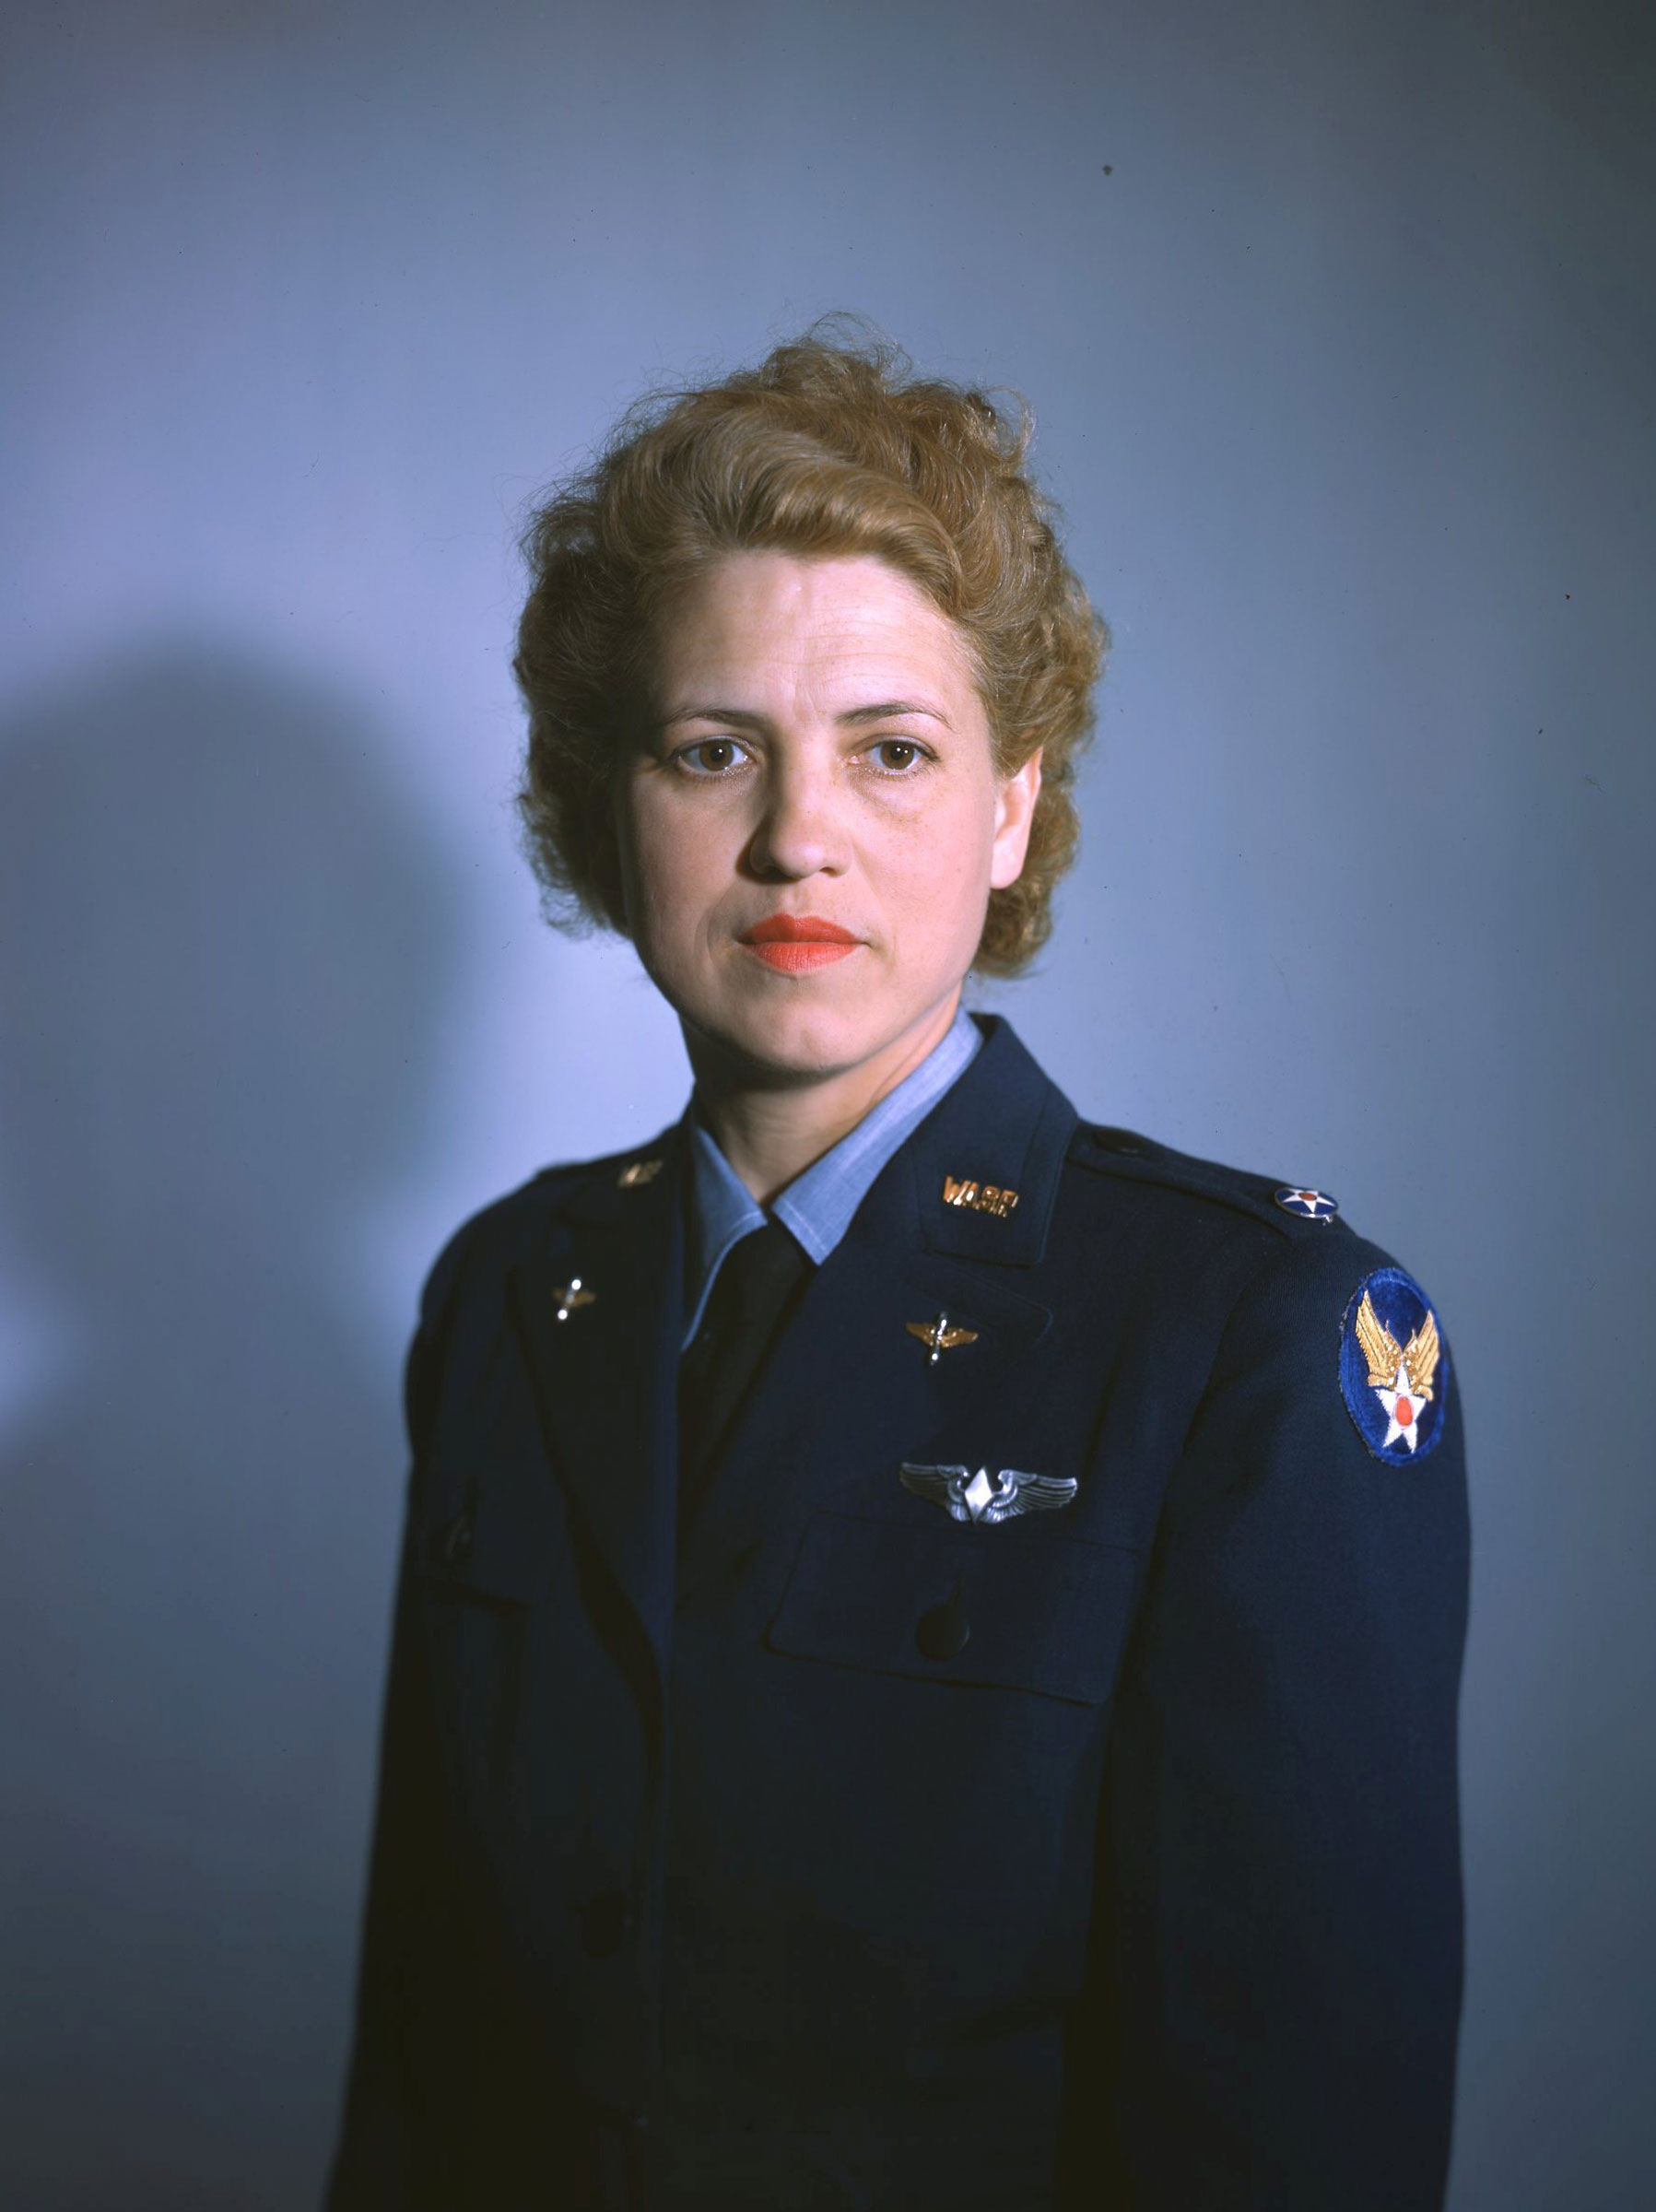 Portrait of Jacqueline Cochran in her uniform